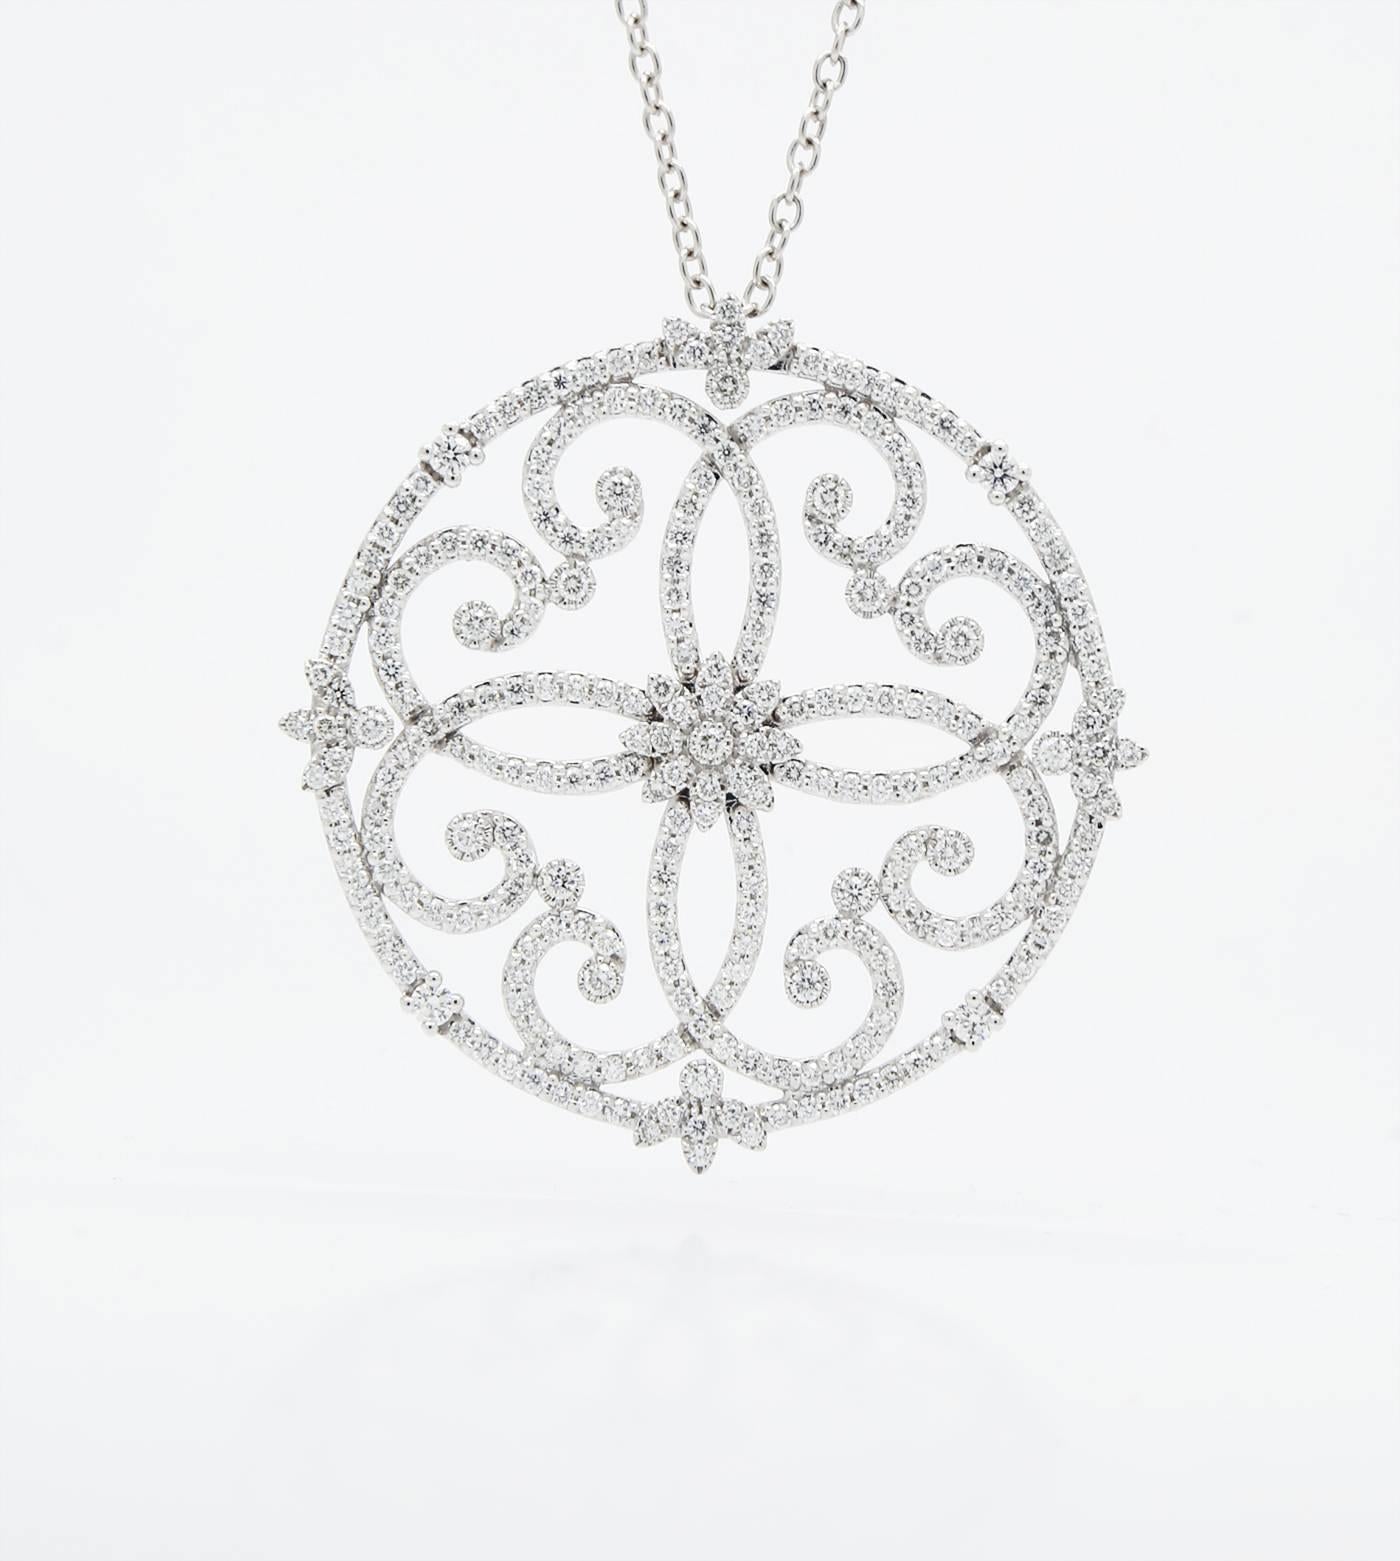 Women's 2.80 Carat White Diamonds Necklace Handmade in 18 Karat White Gold For Sale